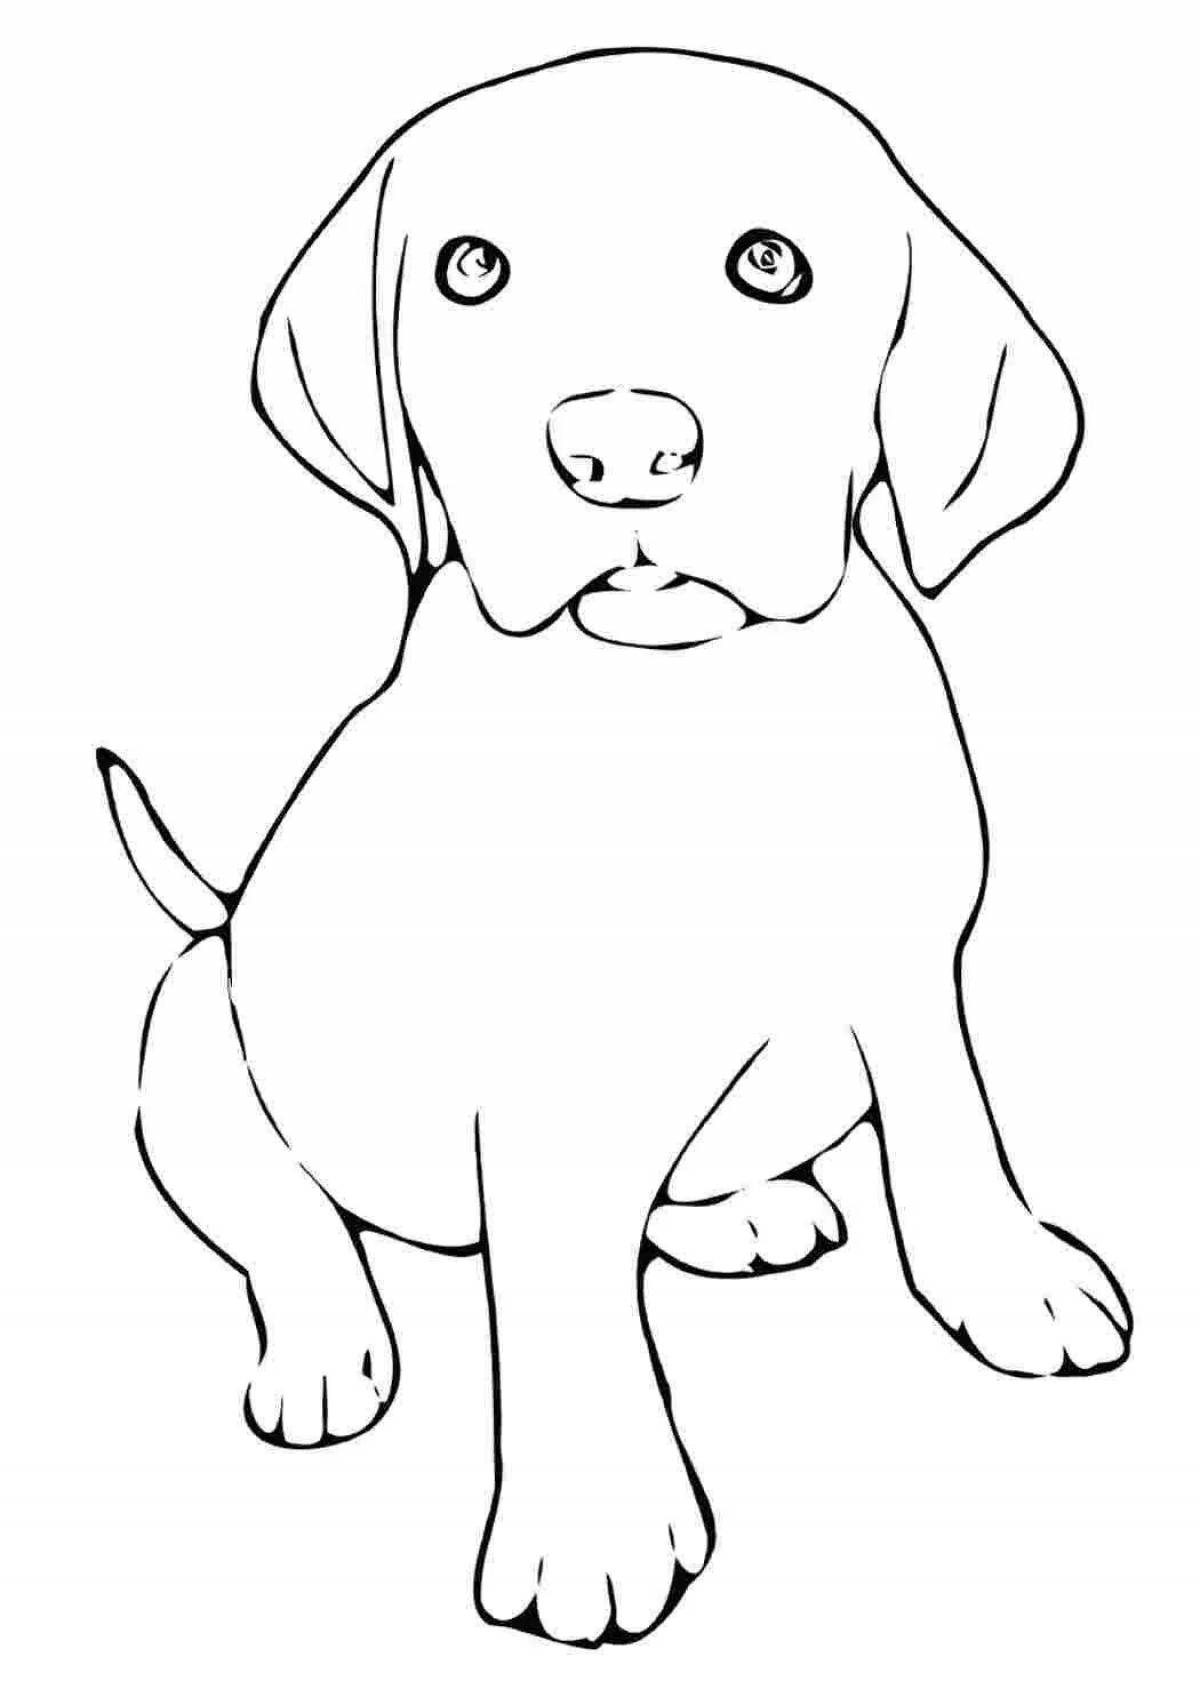 Labrador puppy #1